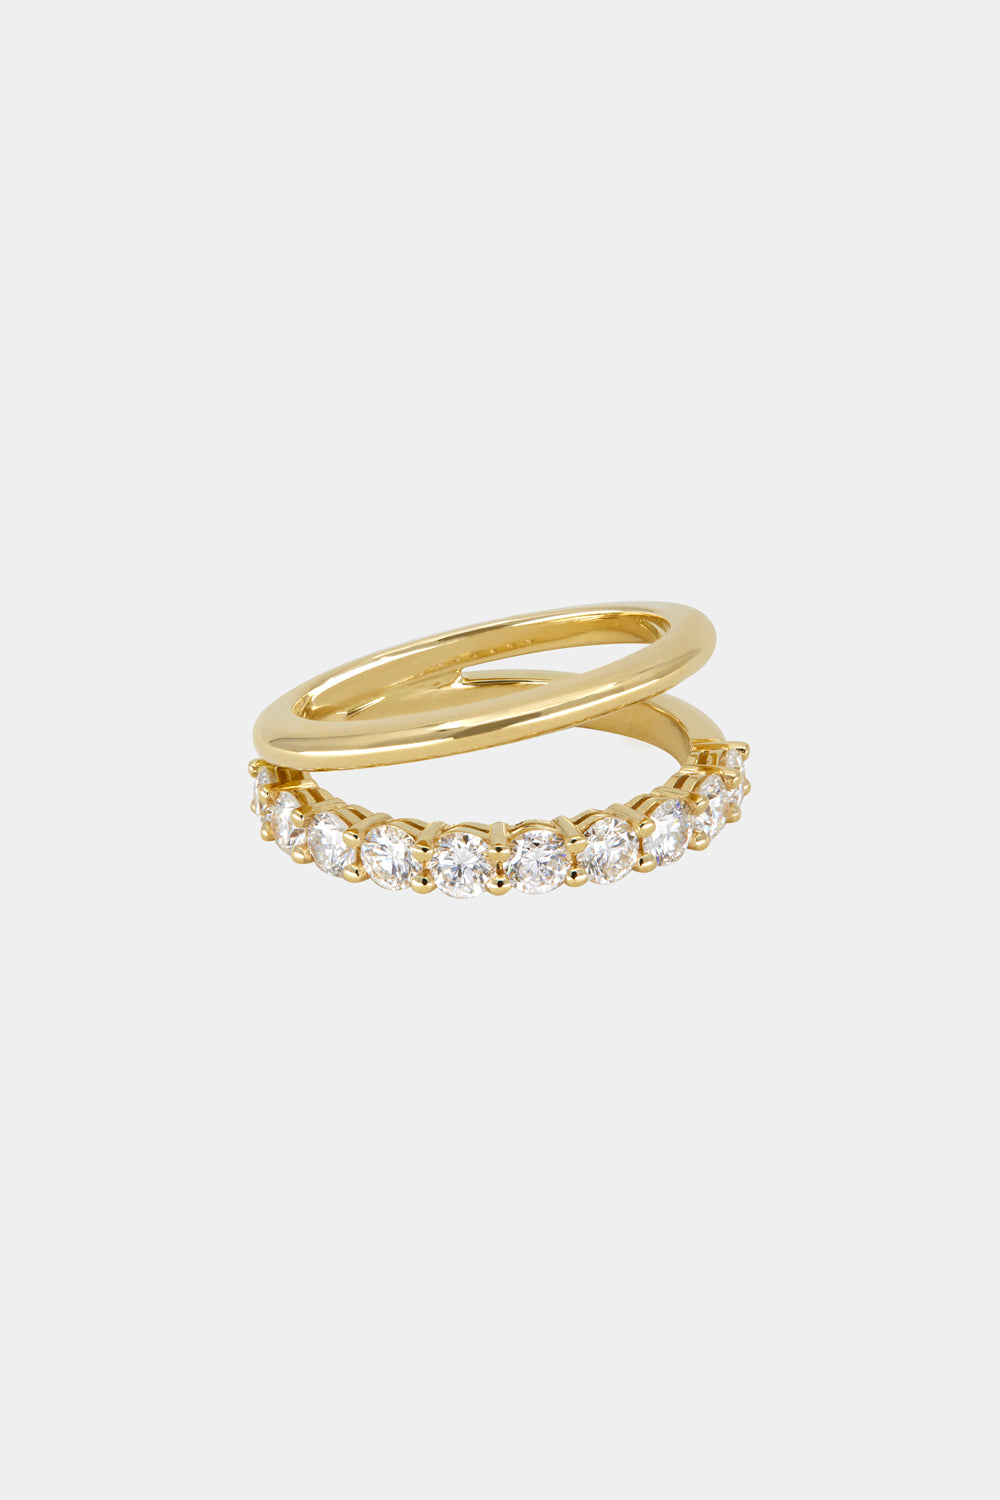 Double Band 10pt Round Diamond Ring | 18K Yellow Gold